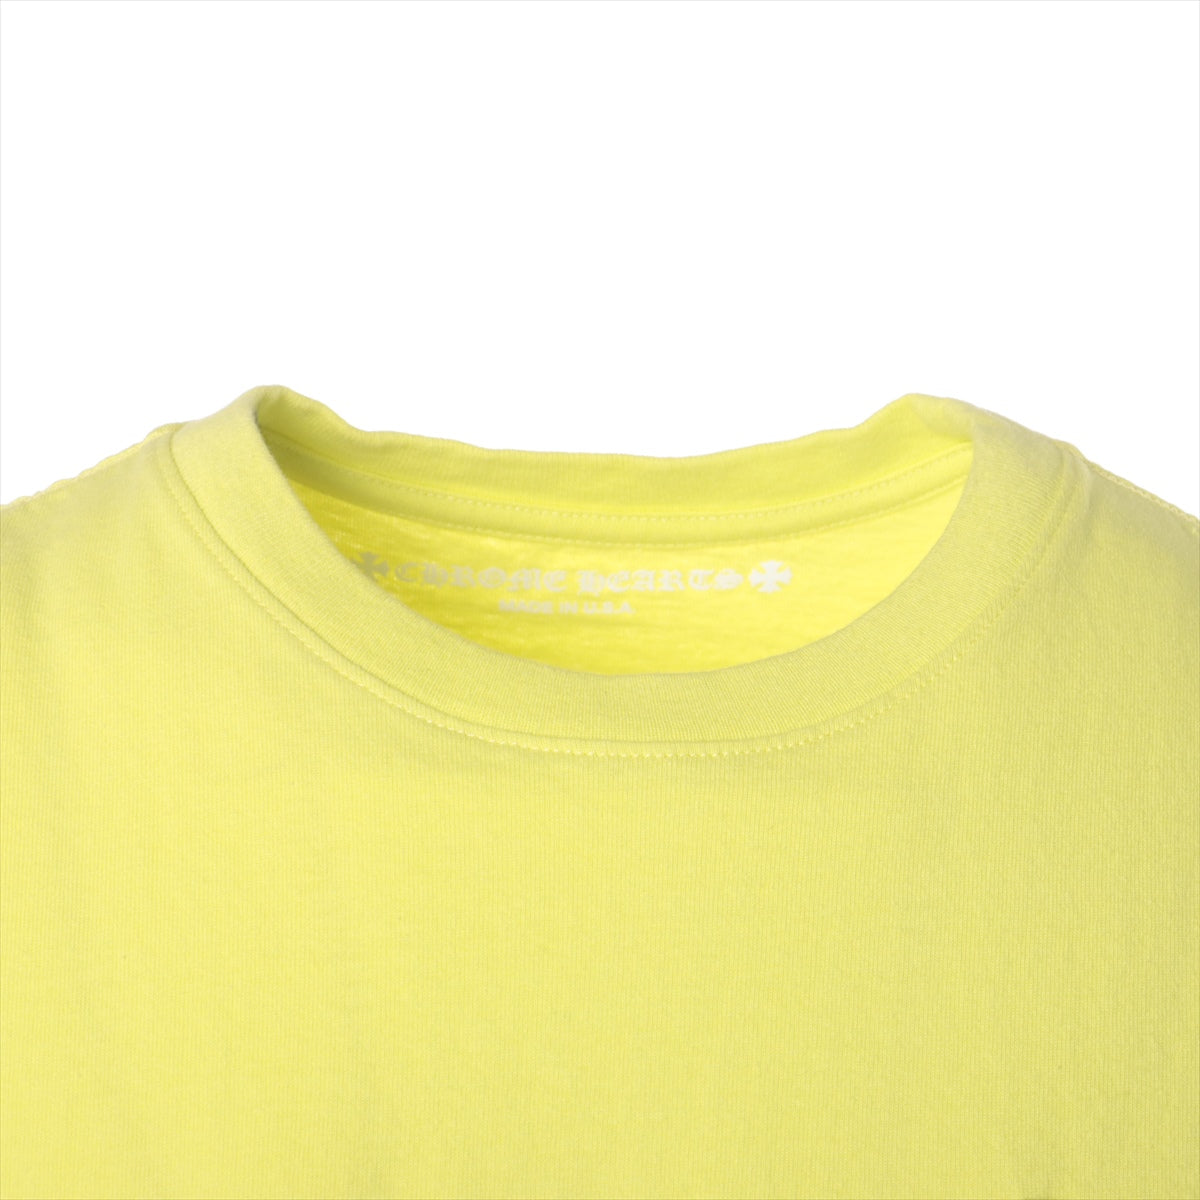 Chrome Hearts Matty Boy T-shirt Cotton size XL lime green PPO CHAIN GAME